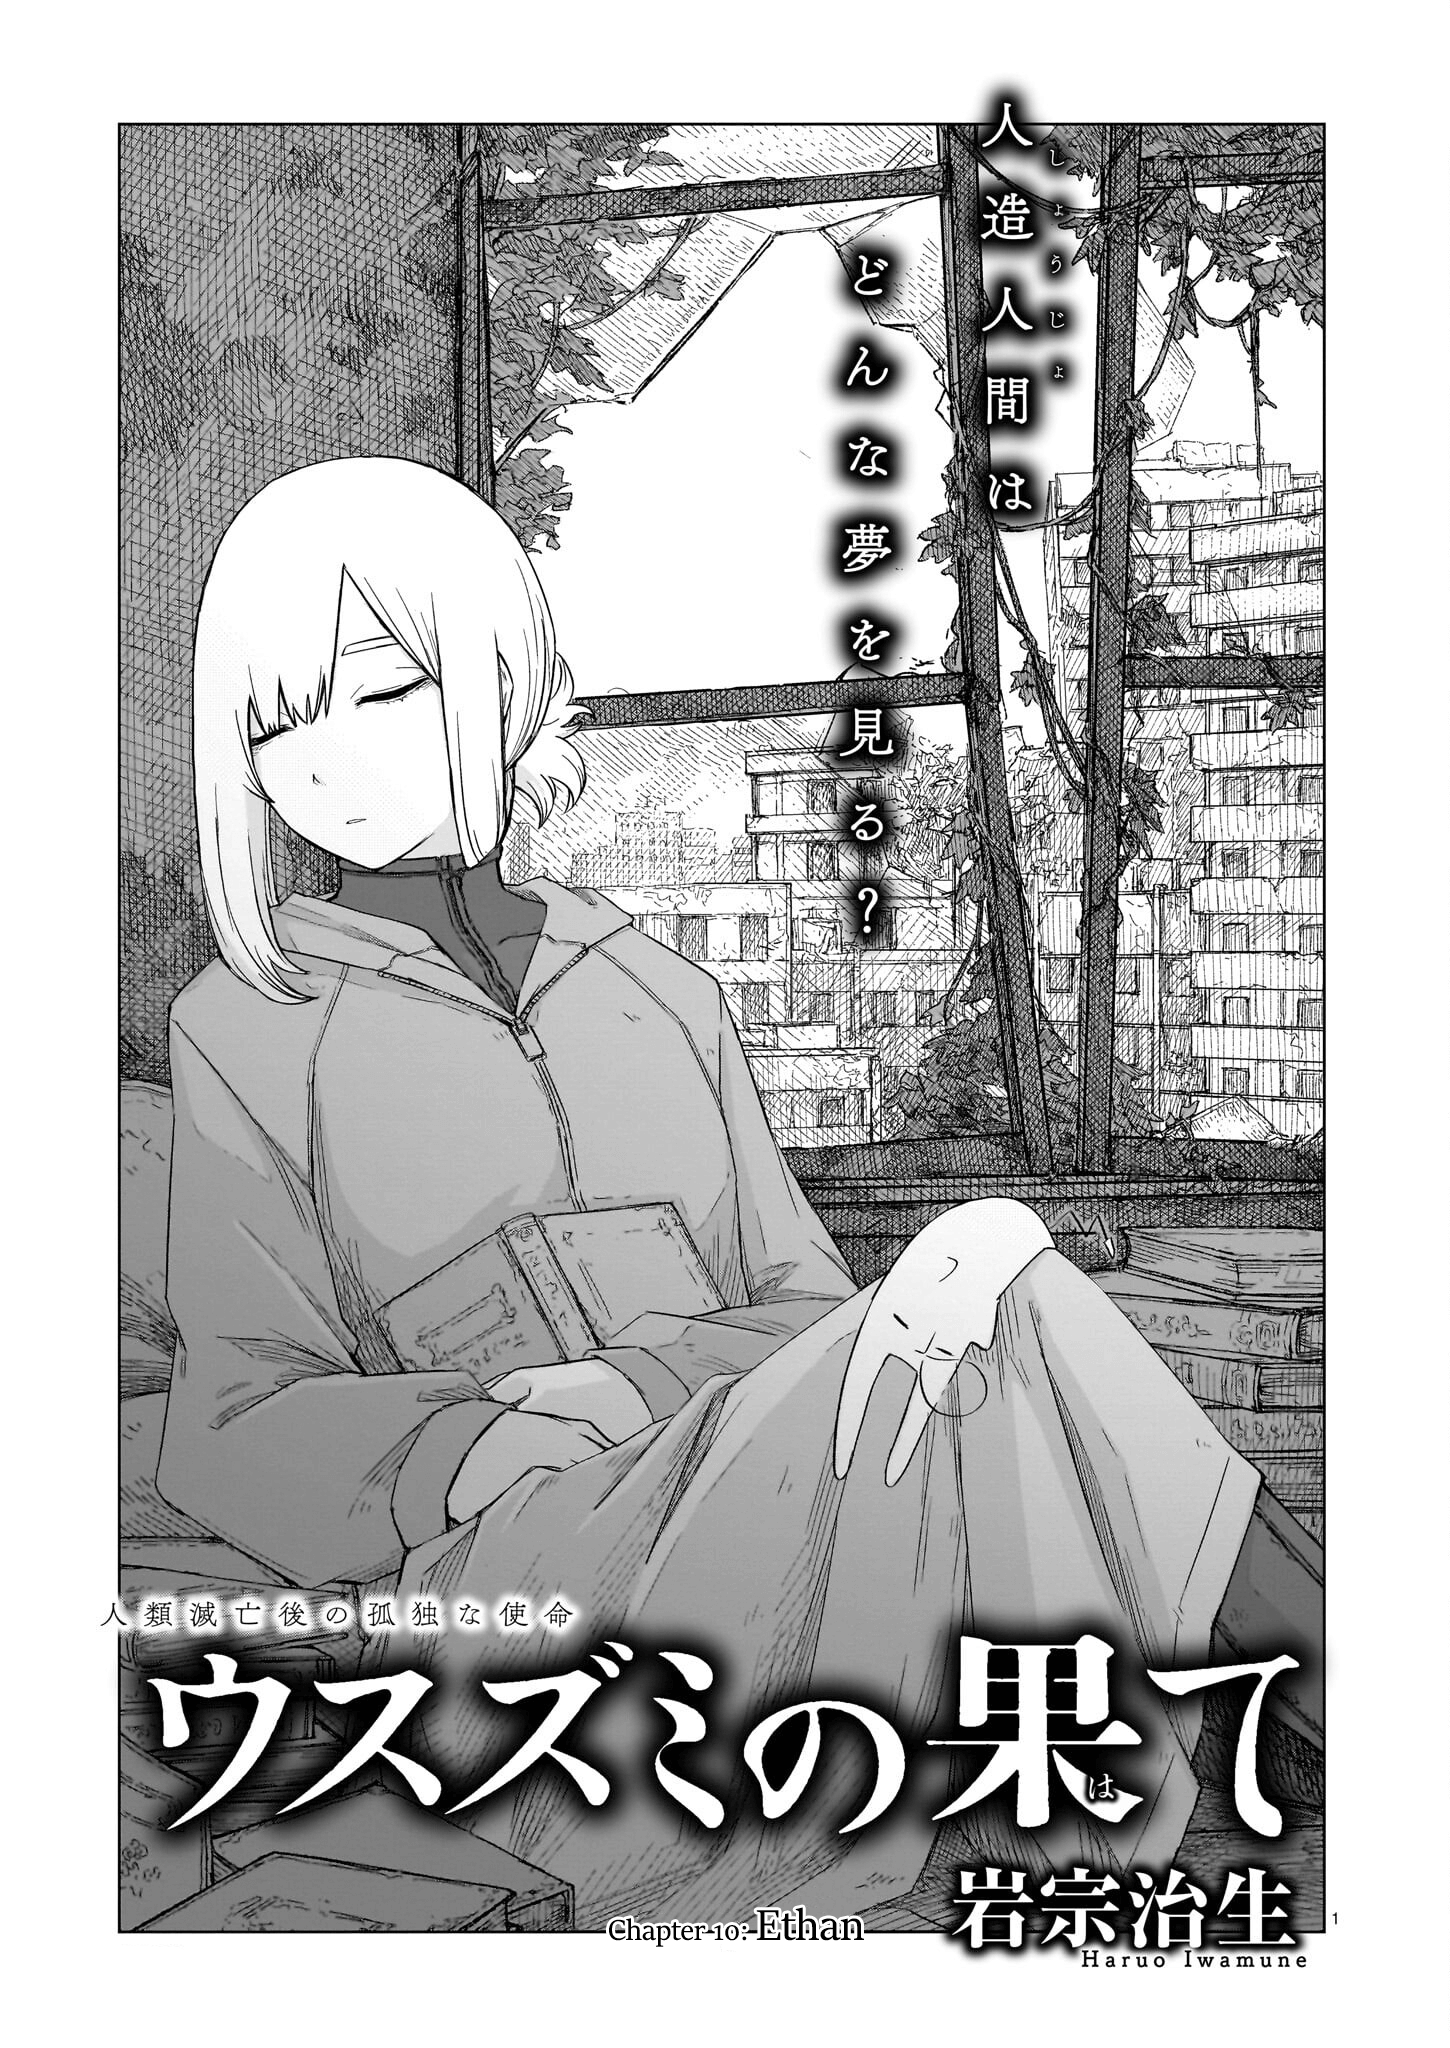 Usuzumi No Hate - Page 1